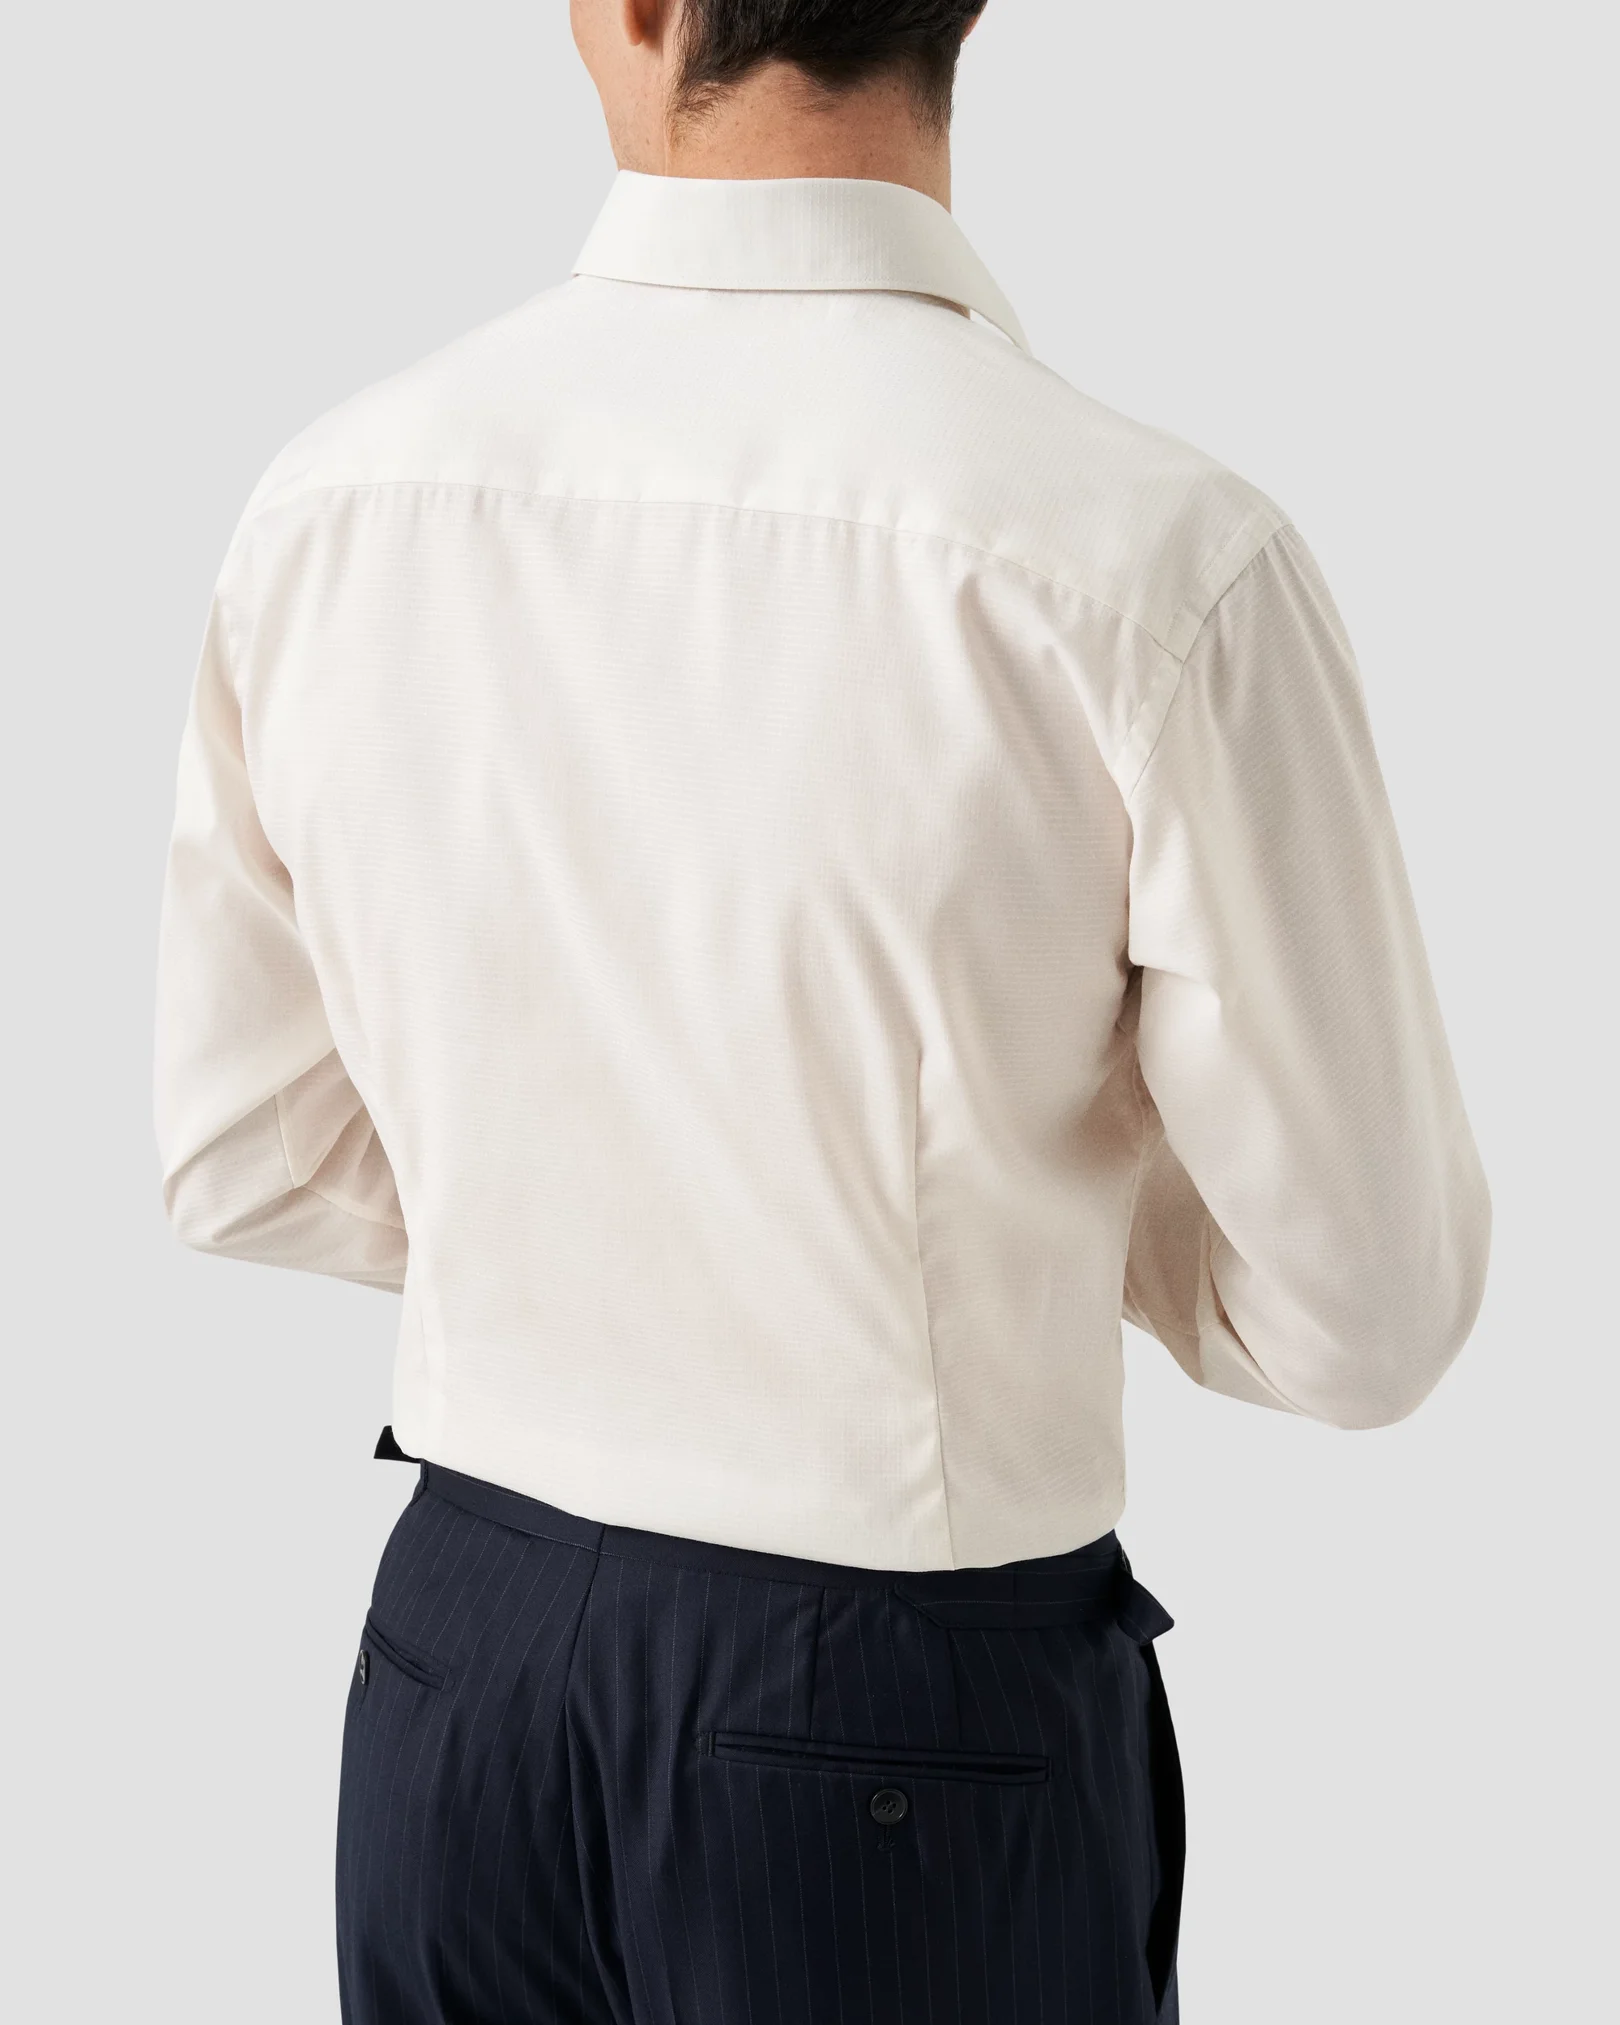 Eton - Off-White Pin-Dot Dobby Shirt